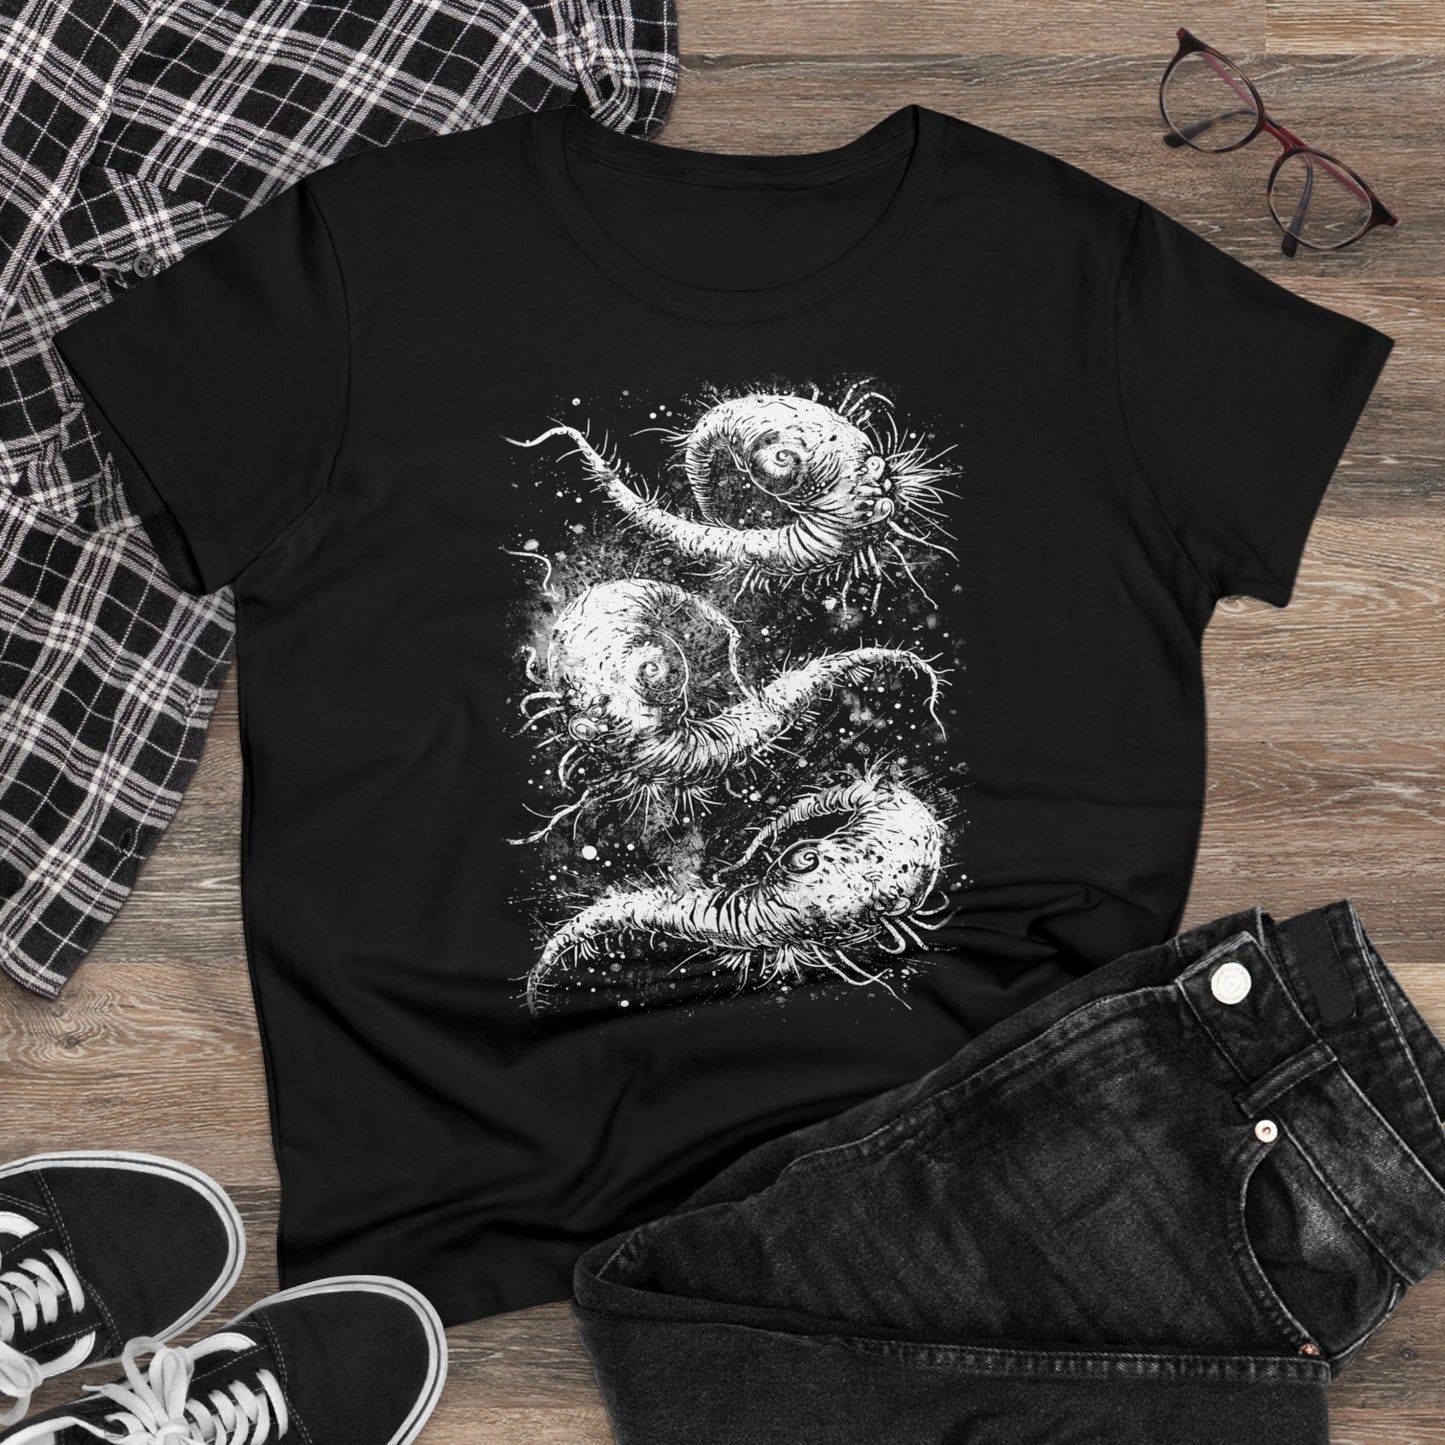 Women's T-shirt Cosmic Worms in White - Frogos Design